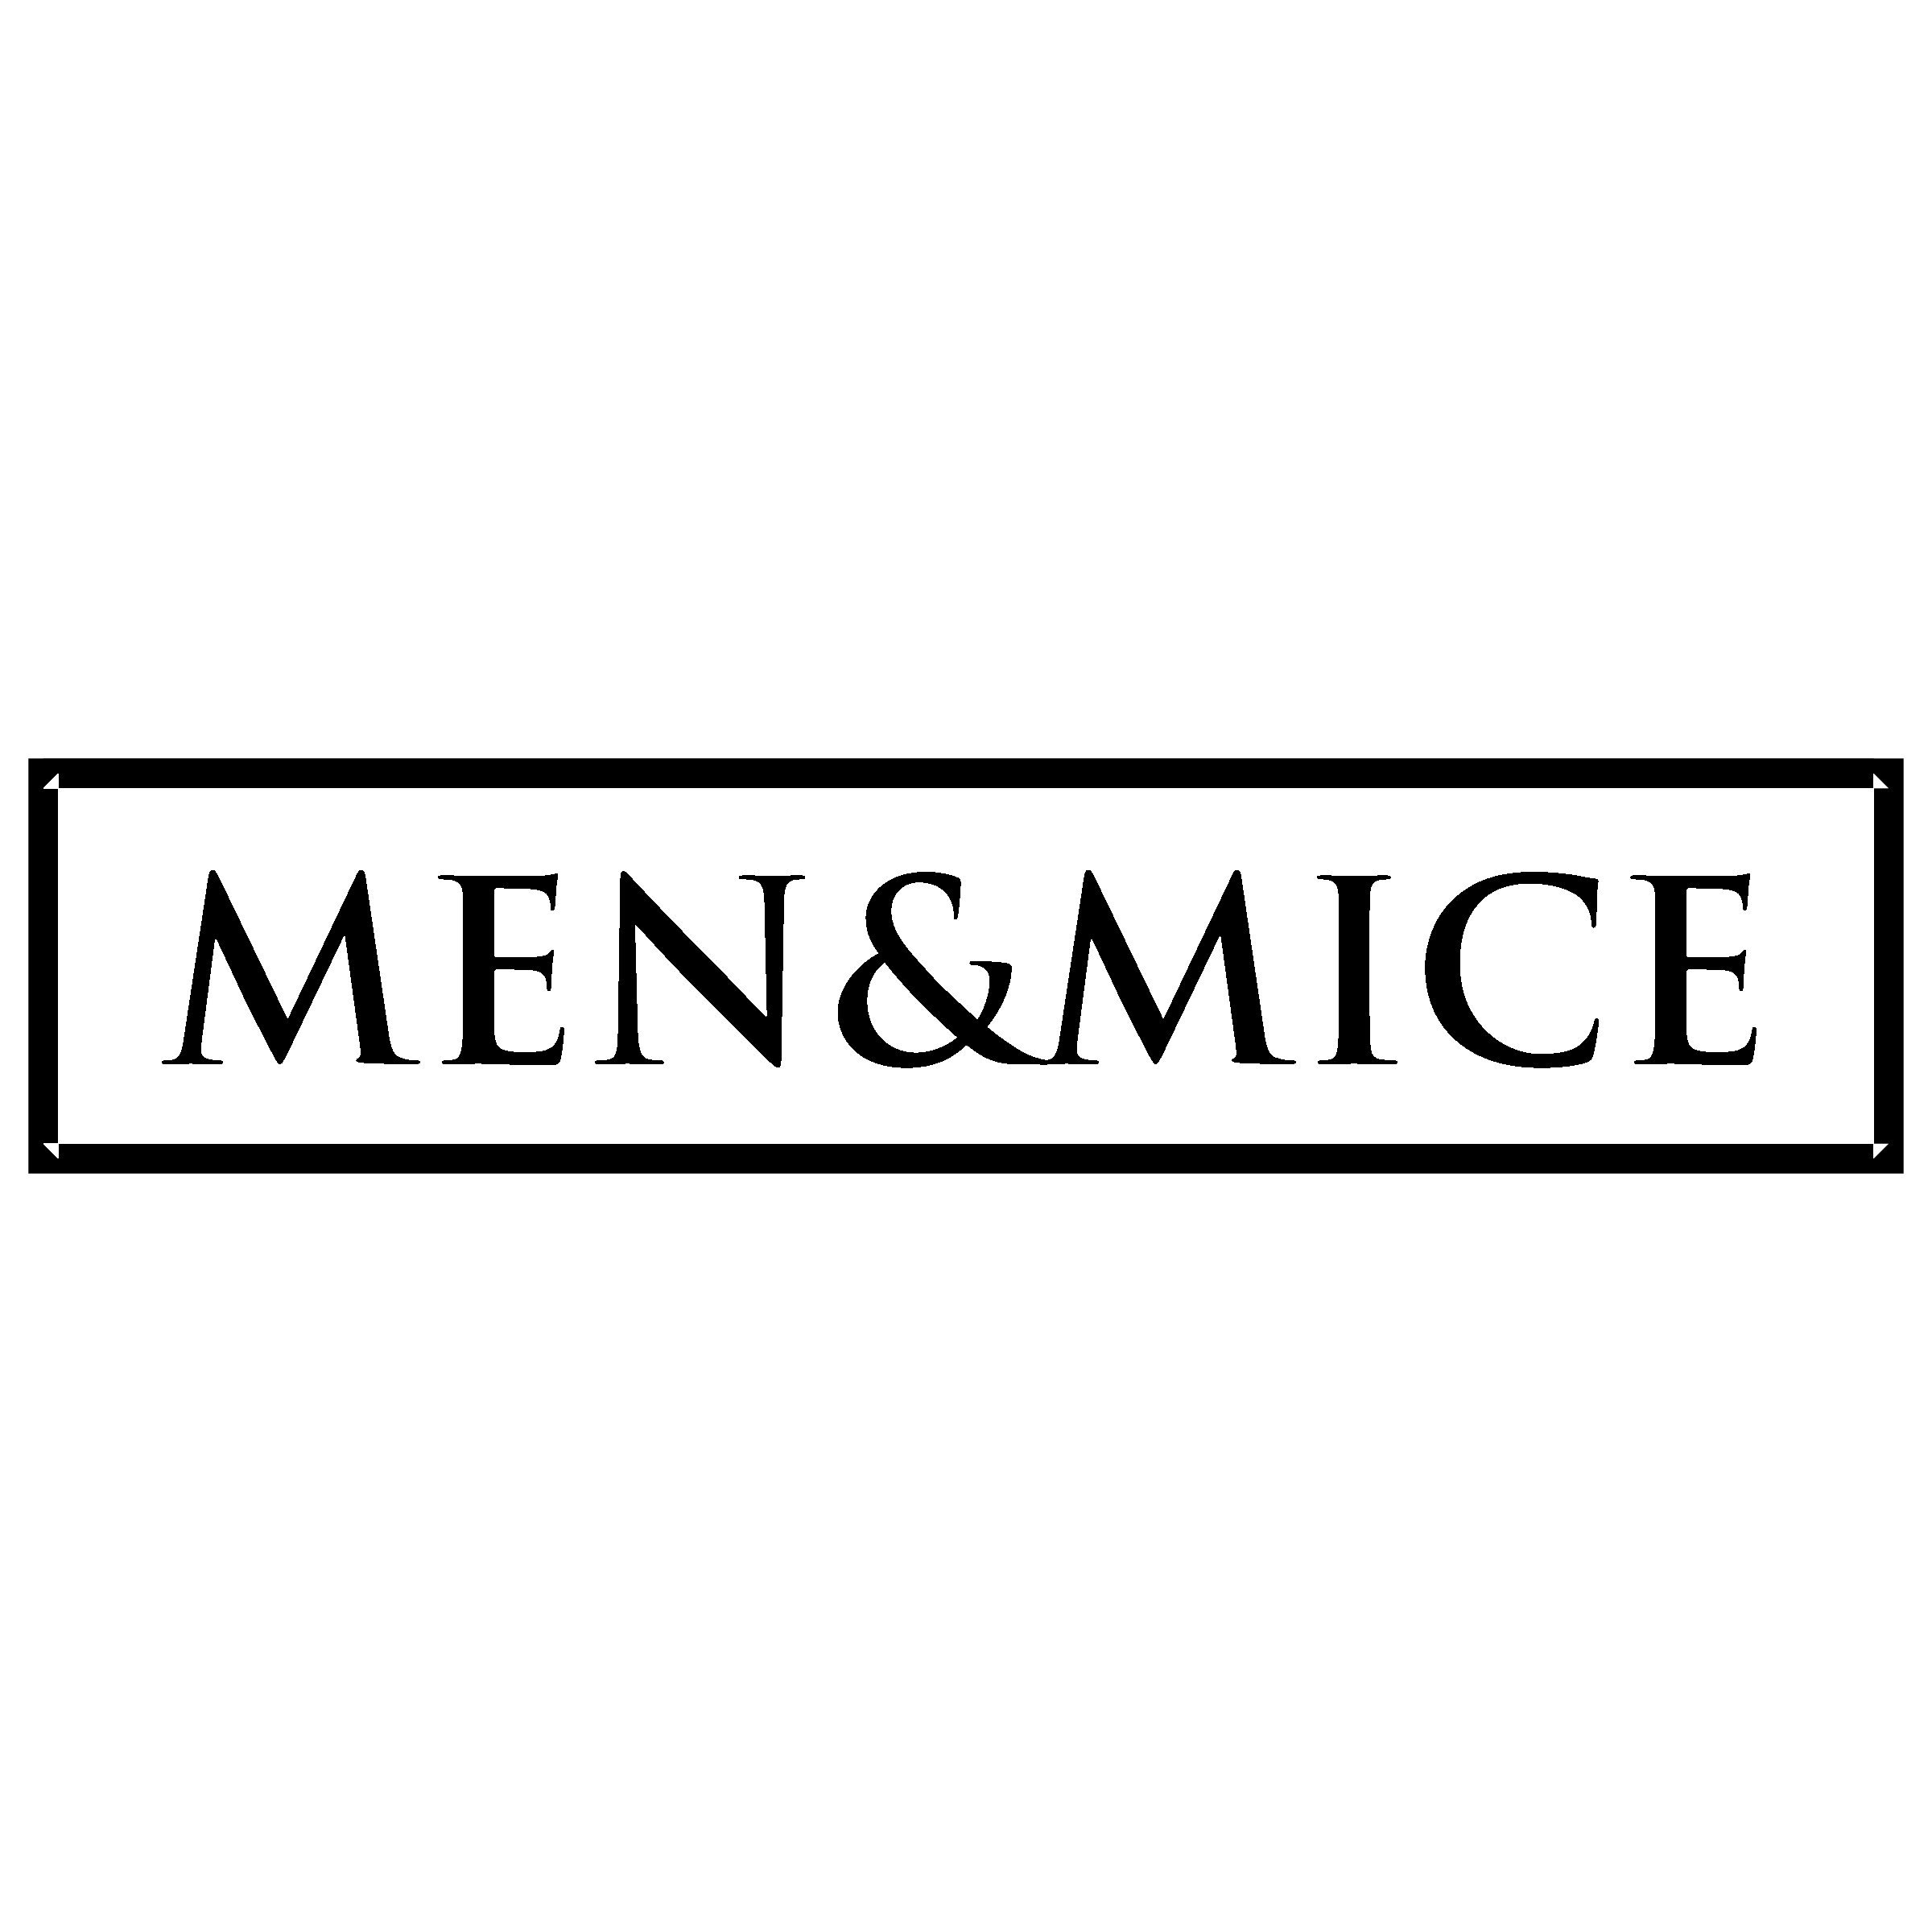 Mice Logo - Men & Mice Logo PNG Transparent & SVG Vector - Freebie Supply